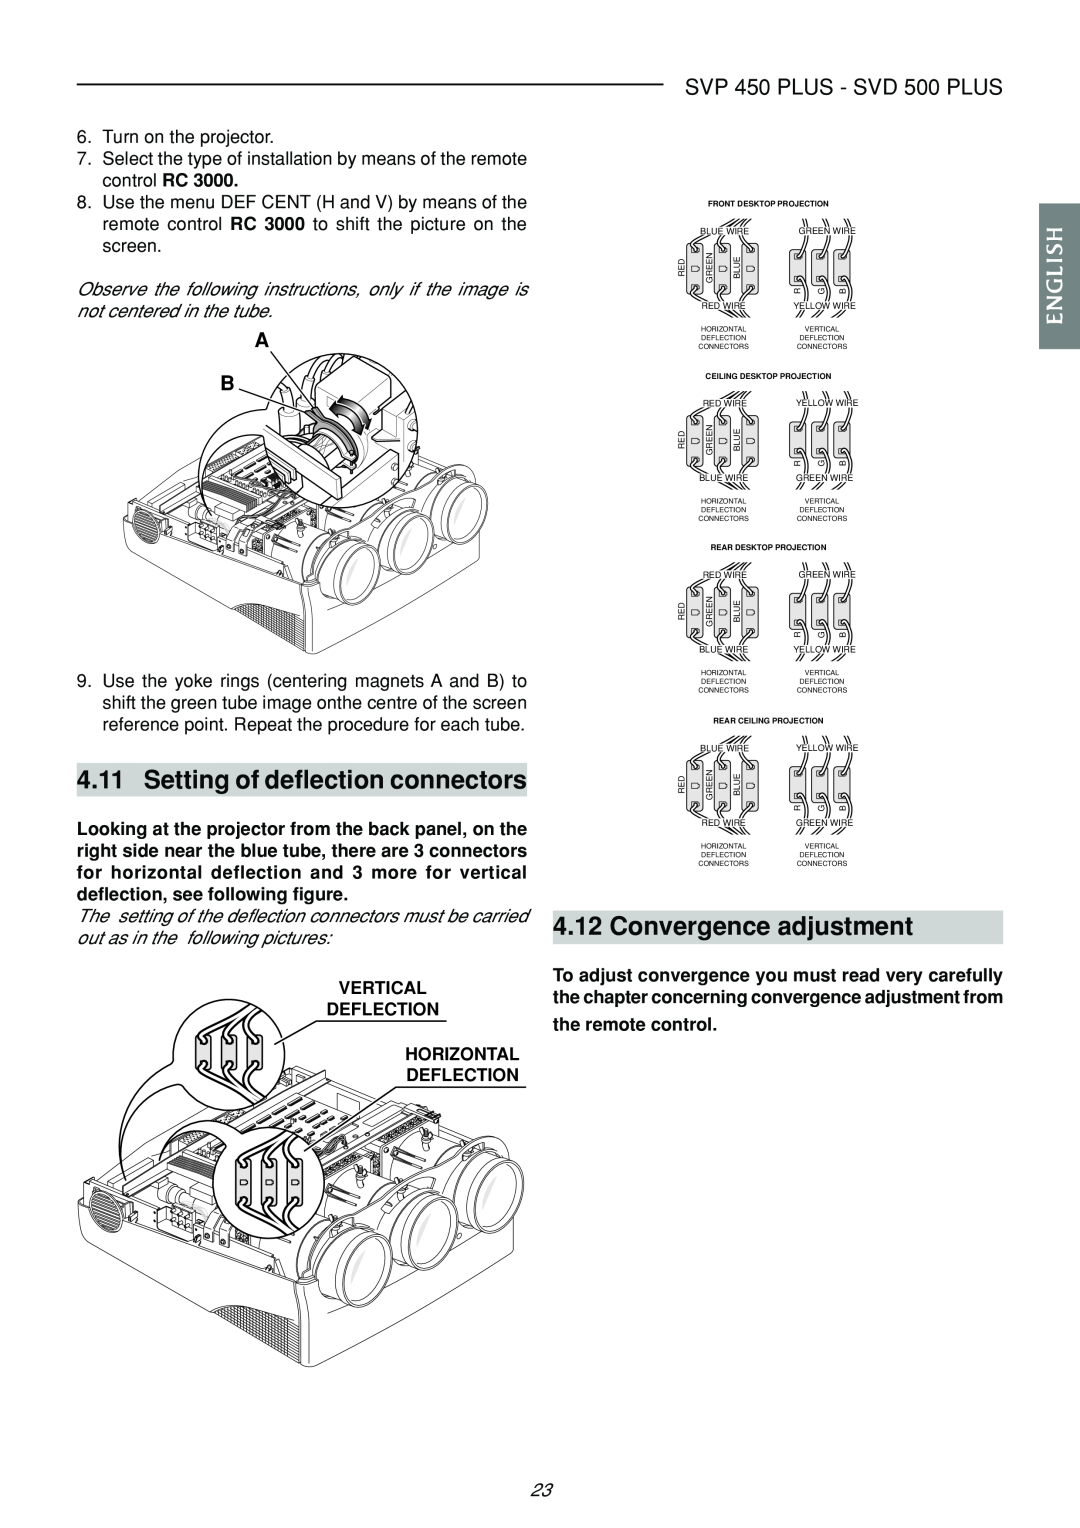 Sim2 Multimedia manual Setting of deflection connectors, Convergence adjustment, SVP 450 PLUS - SVD 500 PLUS, English 